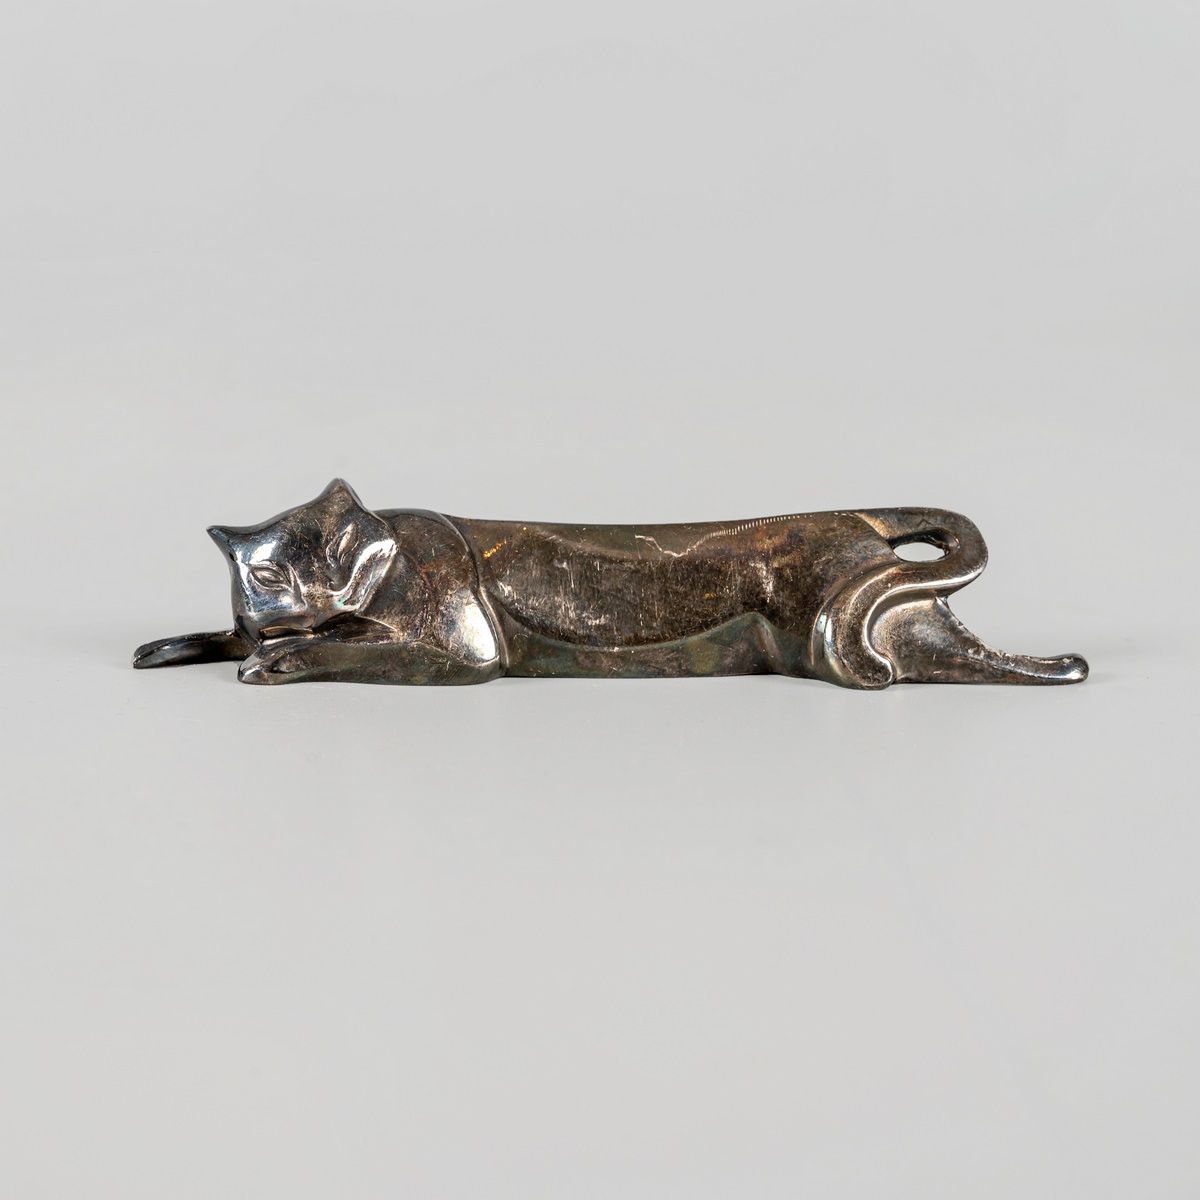 Null 加利亚为克里斯托弗

一套12个镀银金属的动物刀架

每件作品上都标有：O. GALLIA

约1930年